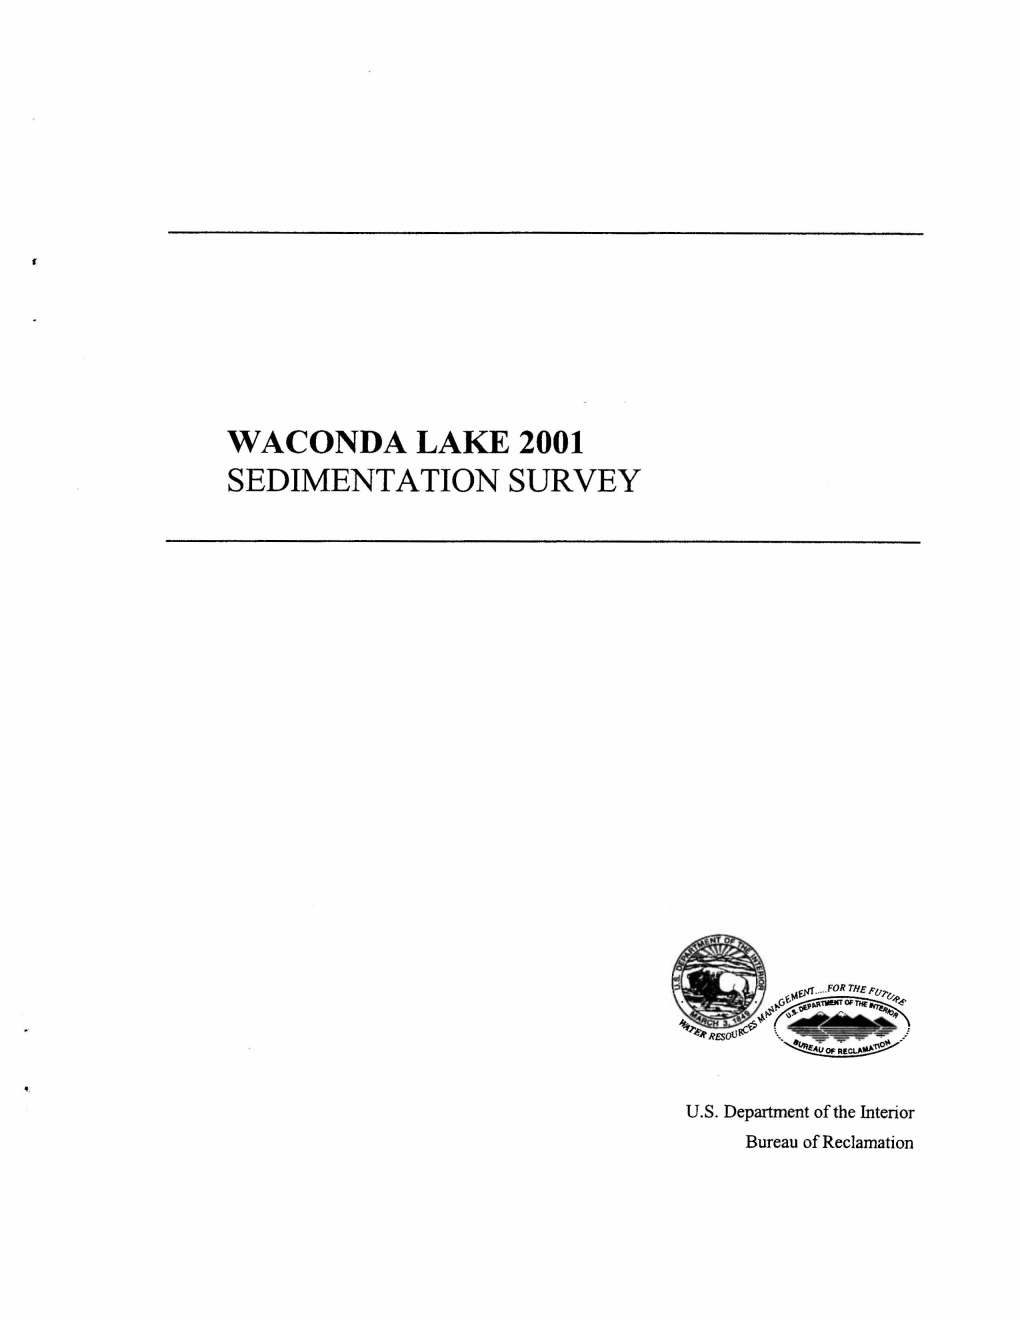 Waconda Lake 2001 Sedimentation Survey